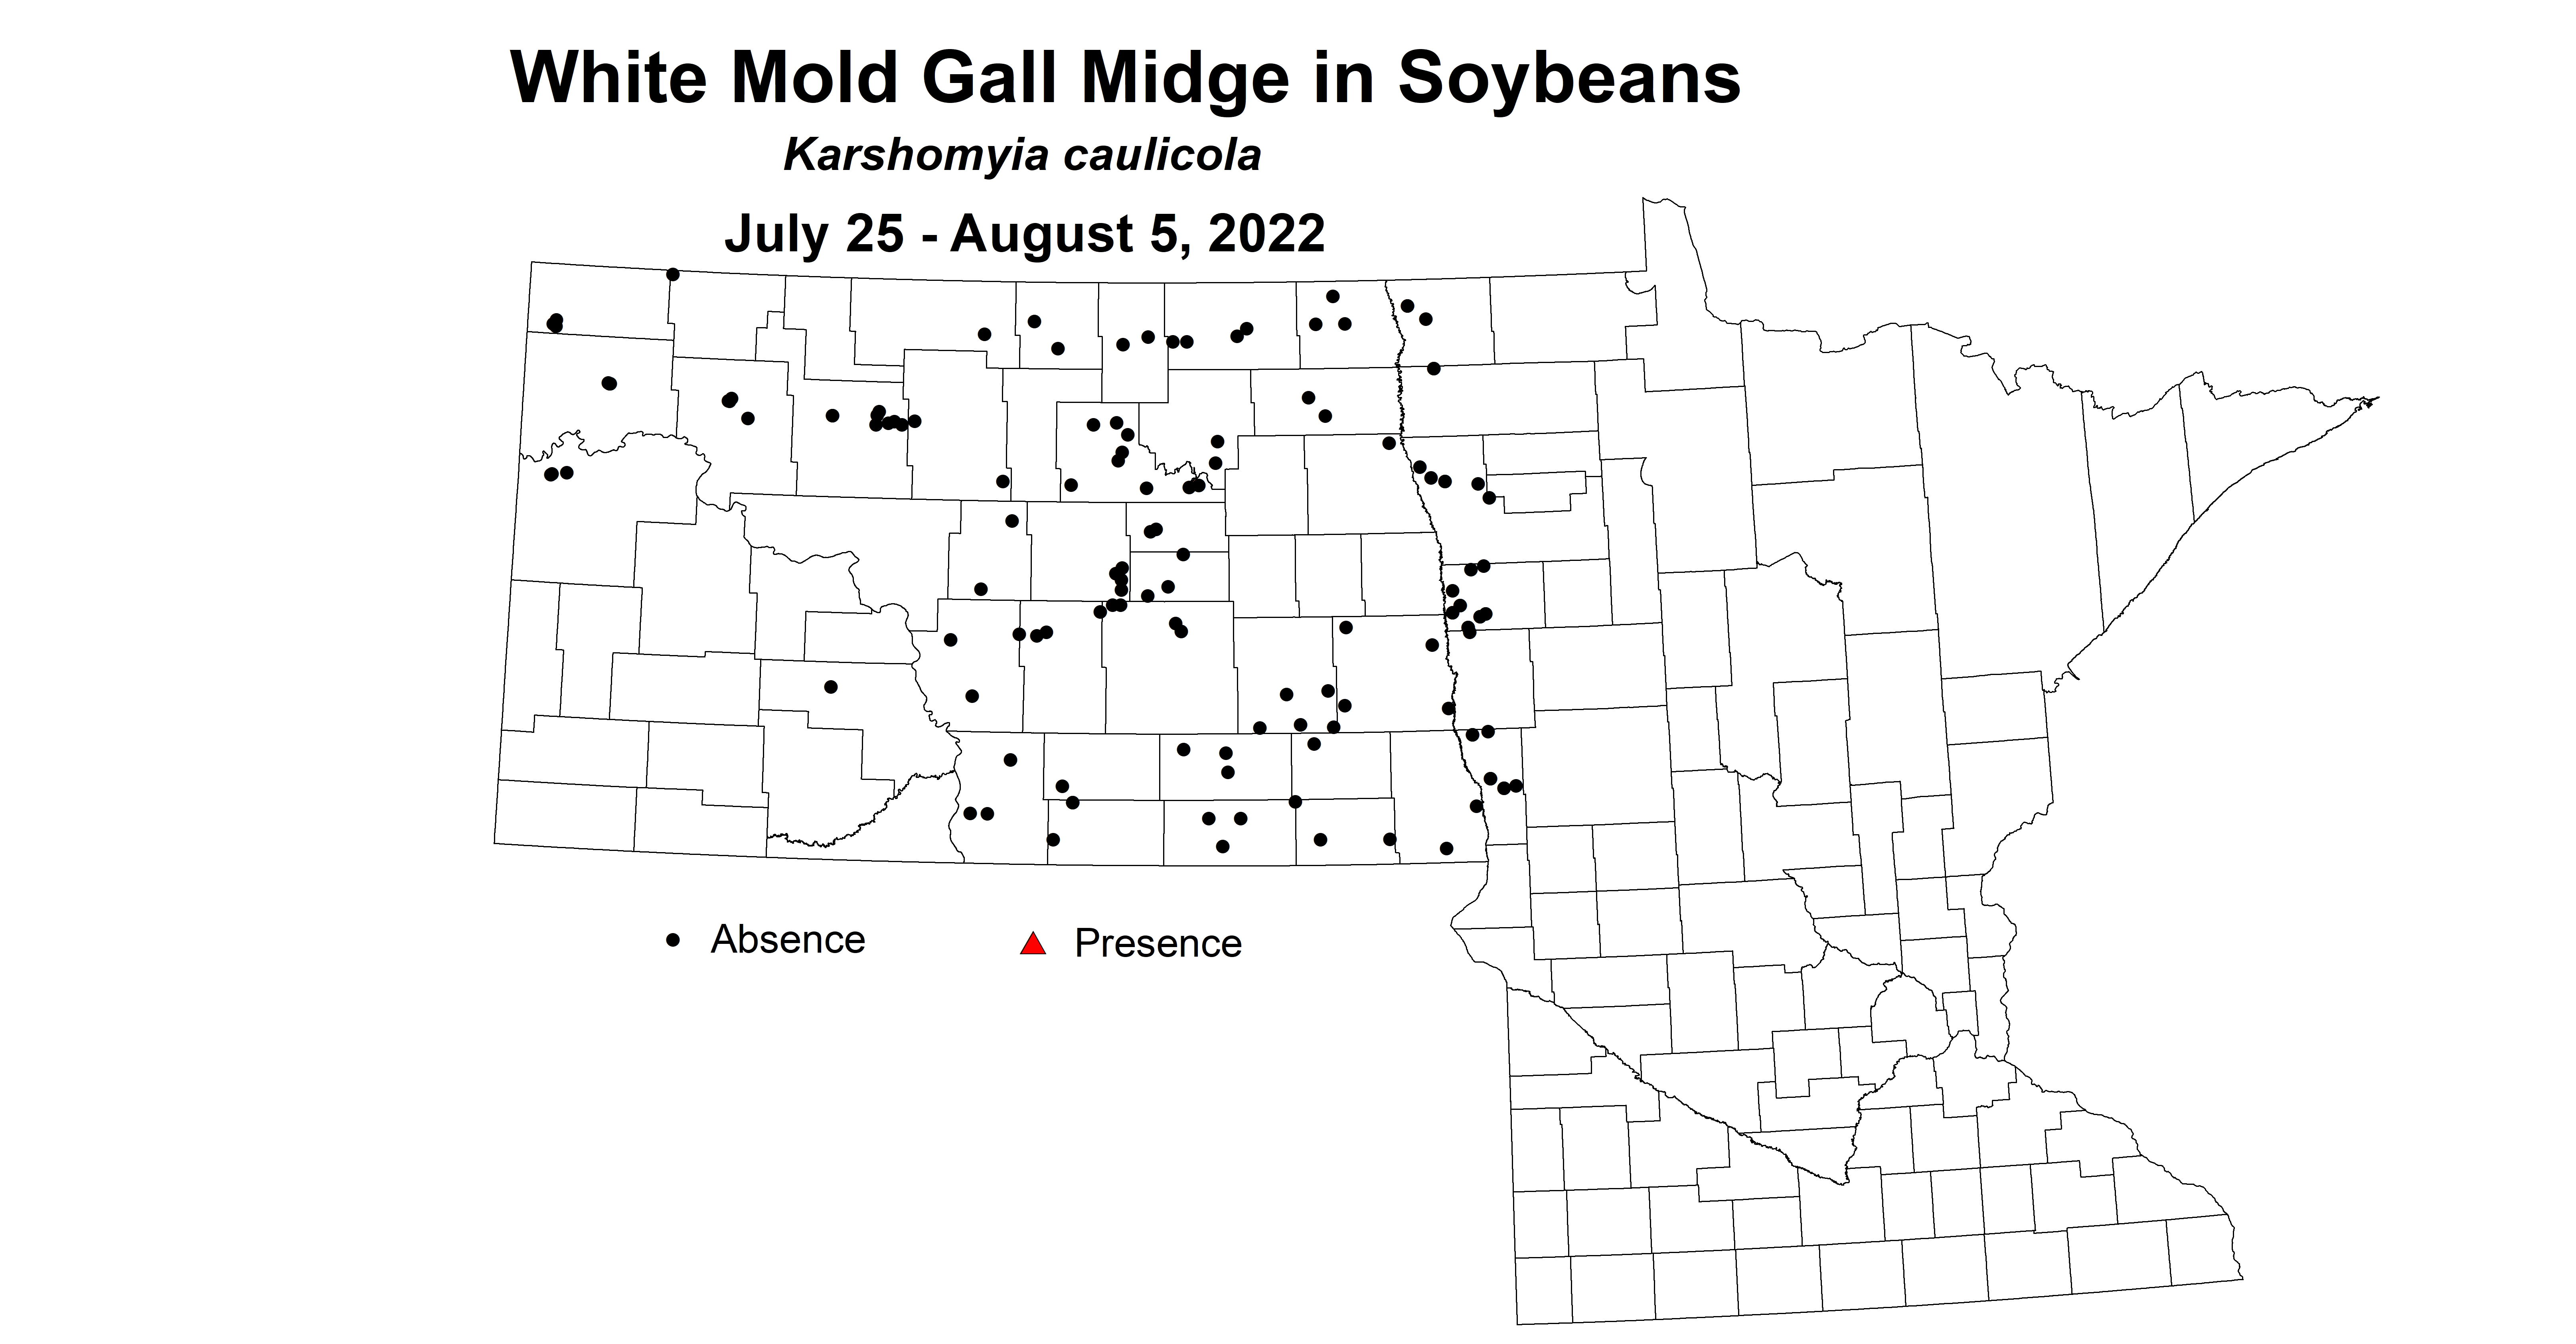 soybean mold gall midge 2022 7.25-8.5.jpg